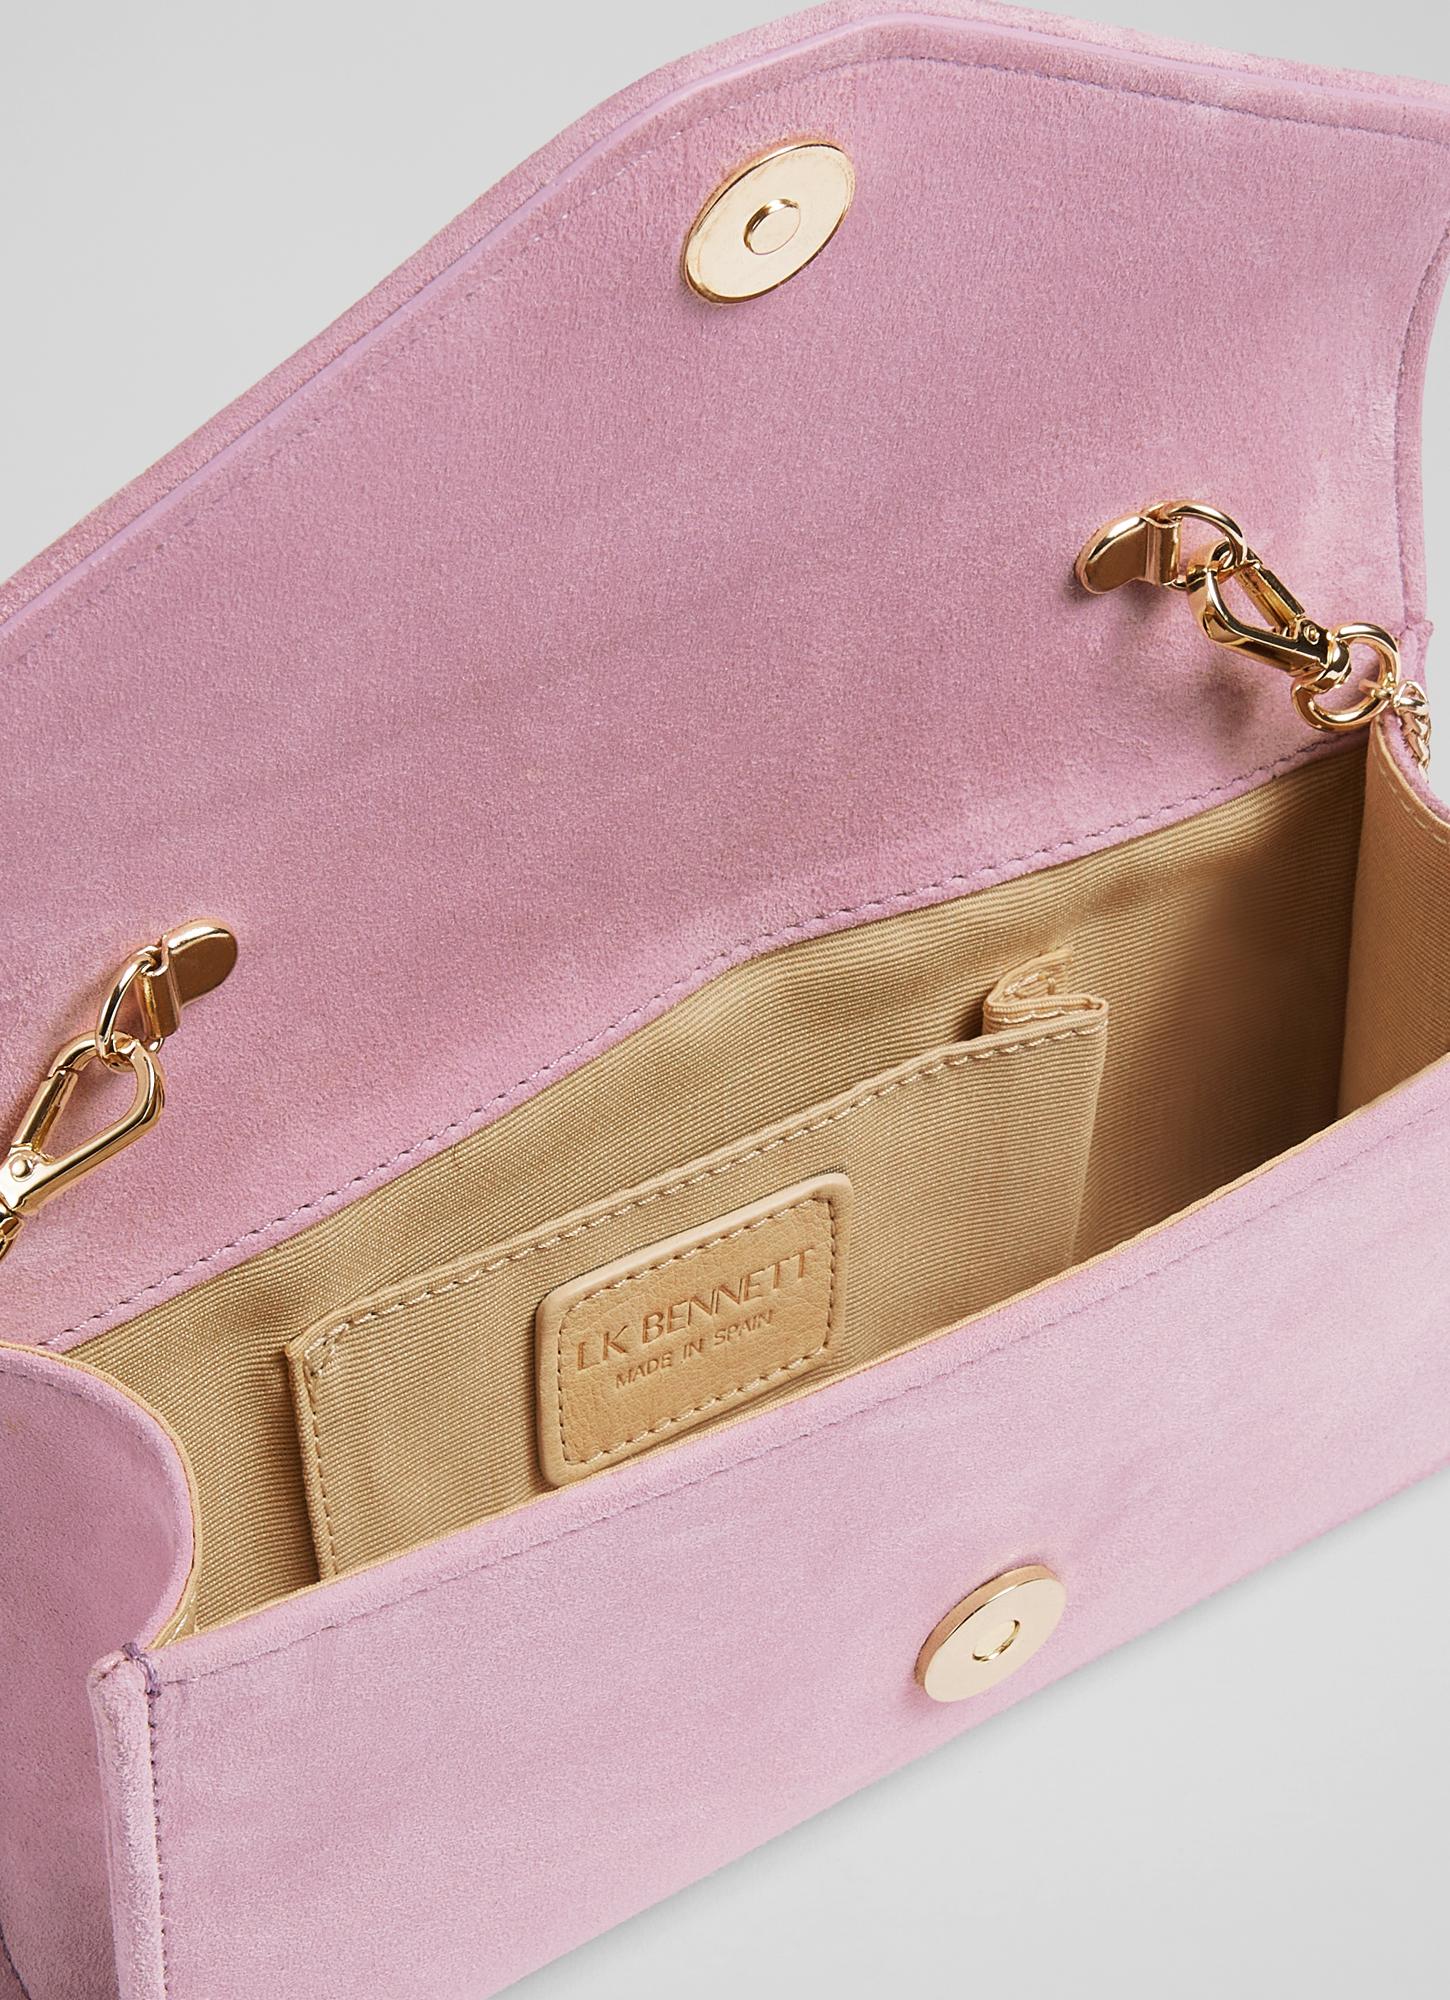 Designer handbag from LK Bennett purse in impeccable condition | in  Shepherds Bush, London | Gumtree